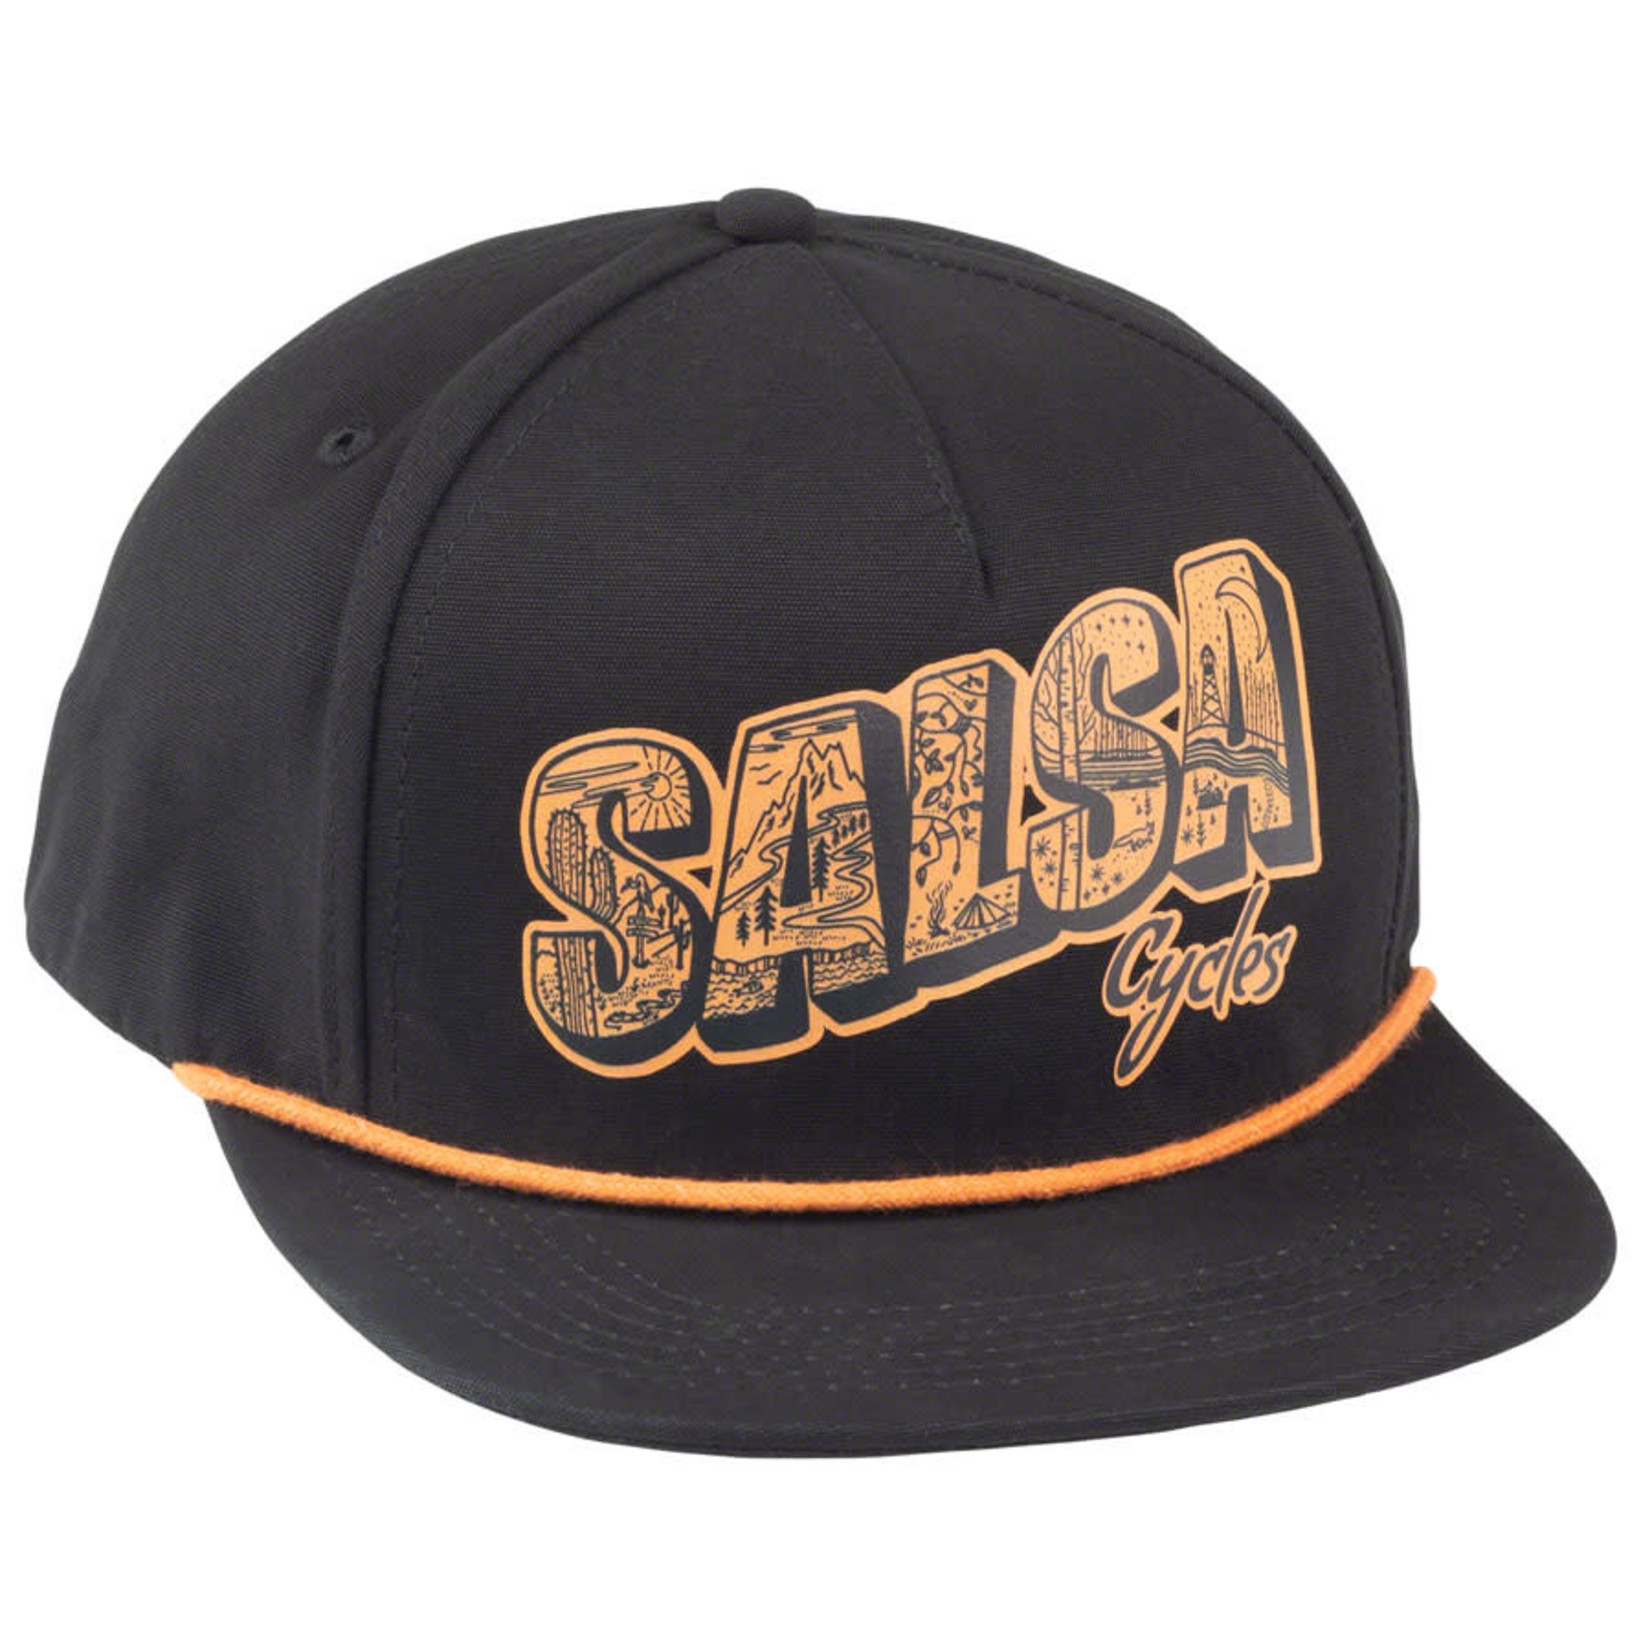 Salsa Salsa Wish You Were Here Baseball Hat - Gray, One Size